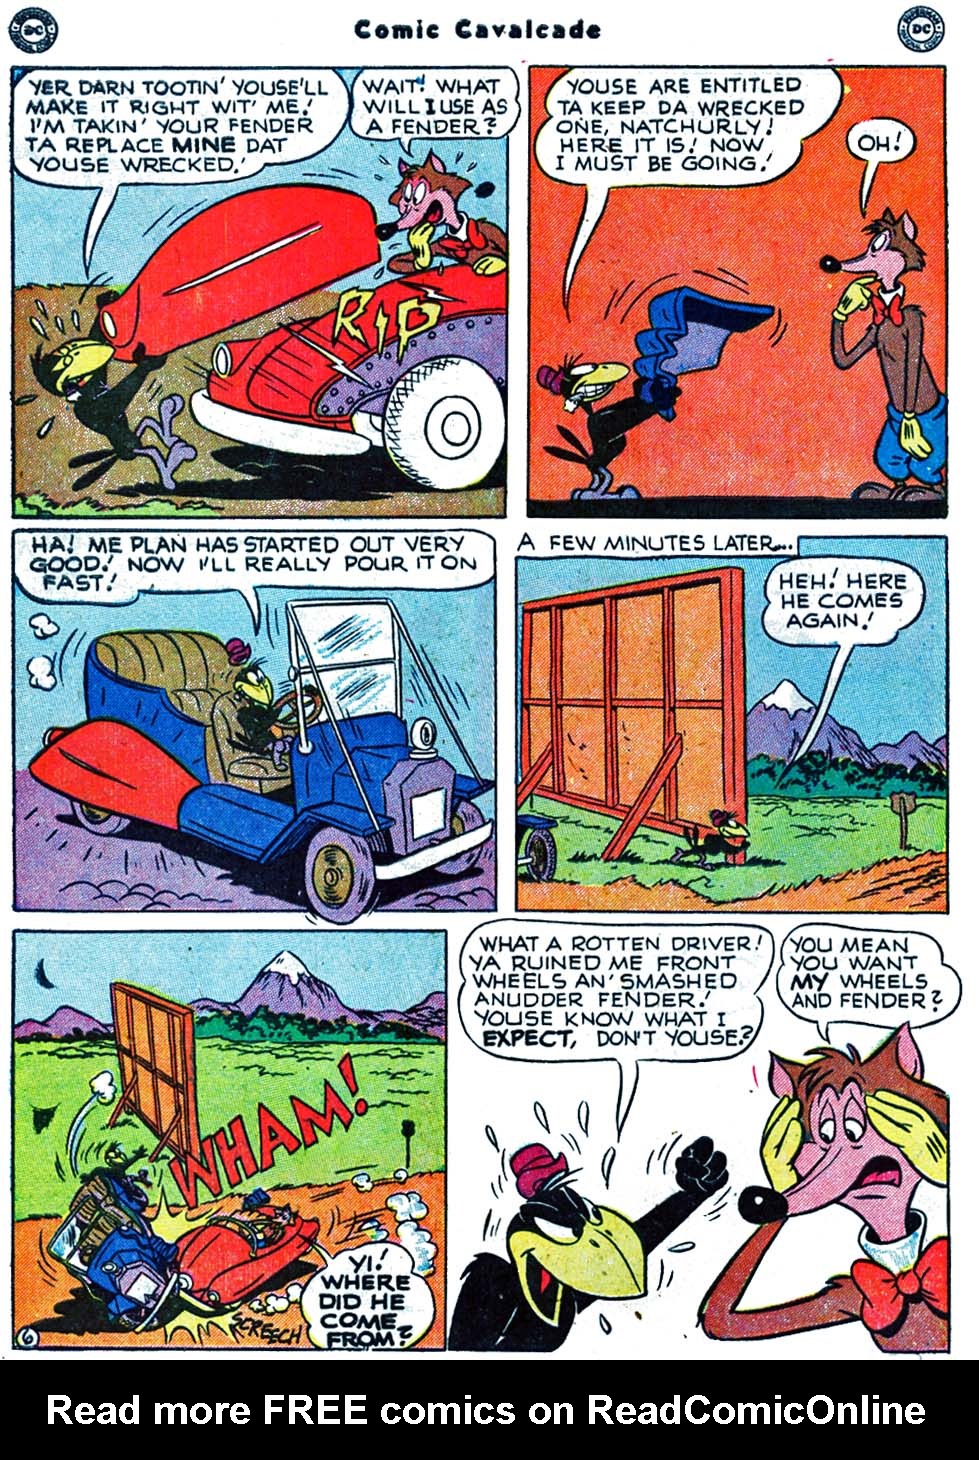 Comic Cavalcade issue 39 - Page 8